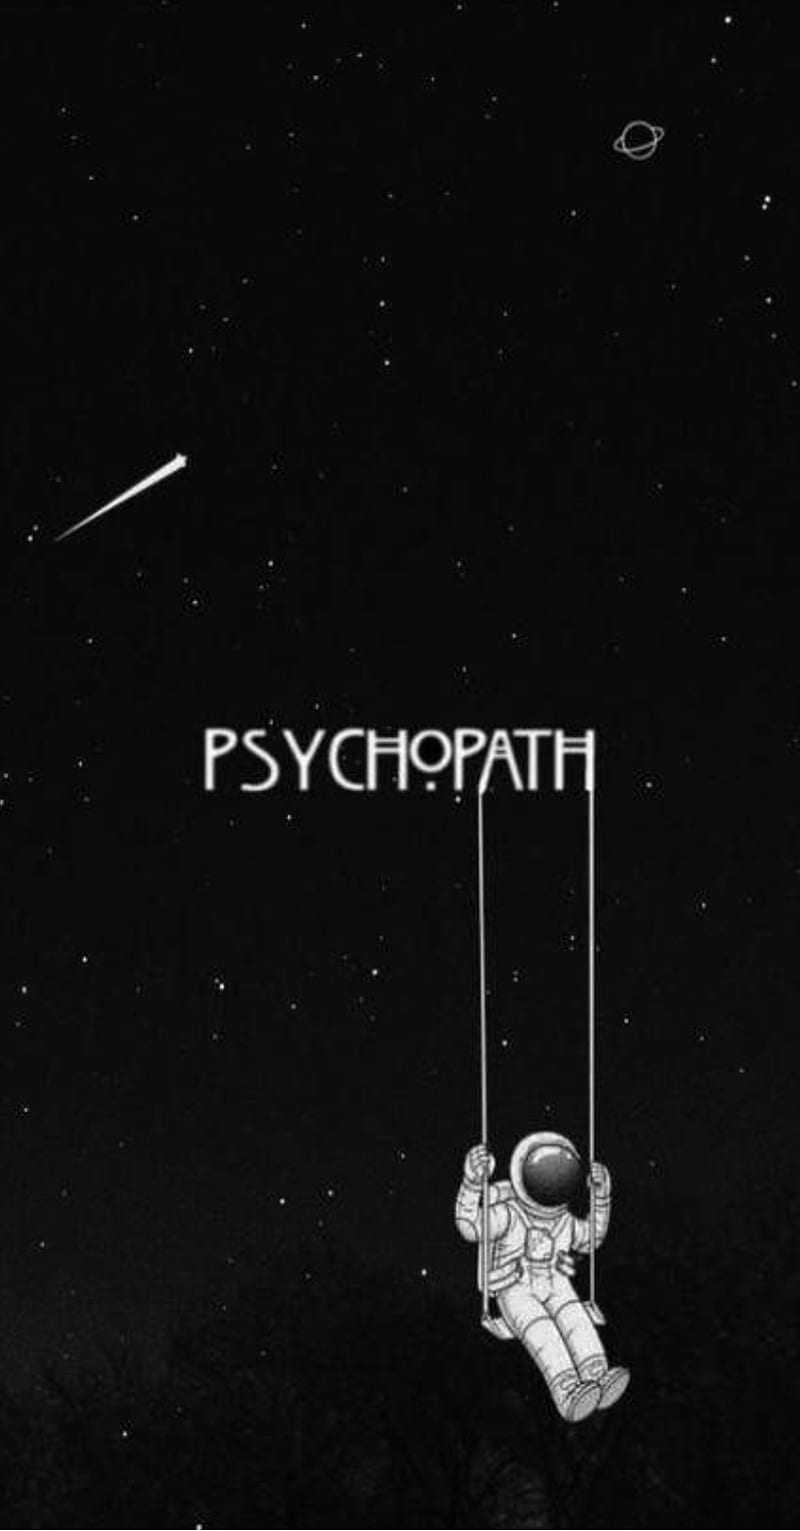 Psychophath - the album - Dark phone, emo, black phone, gothic, black, Android